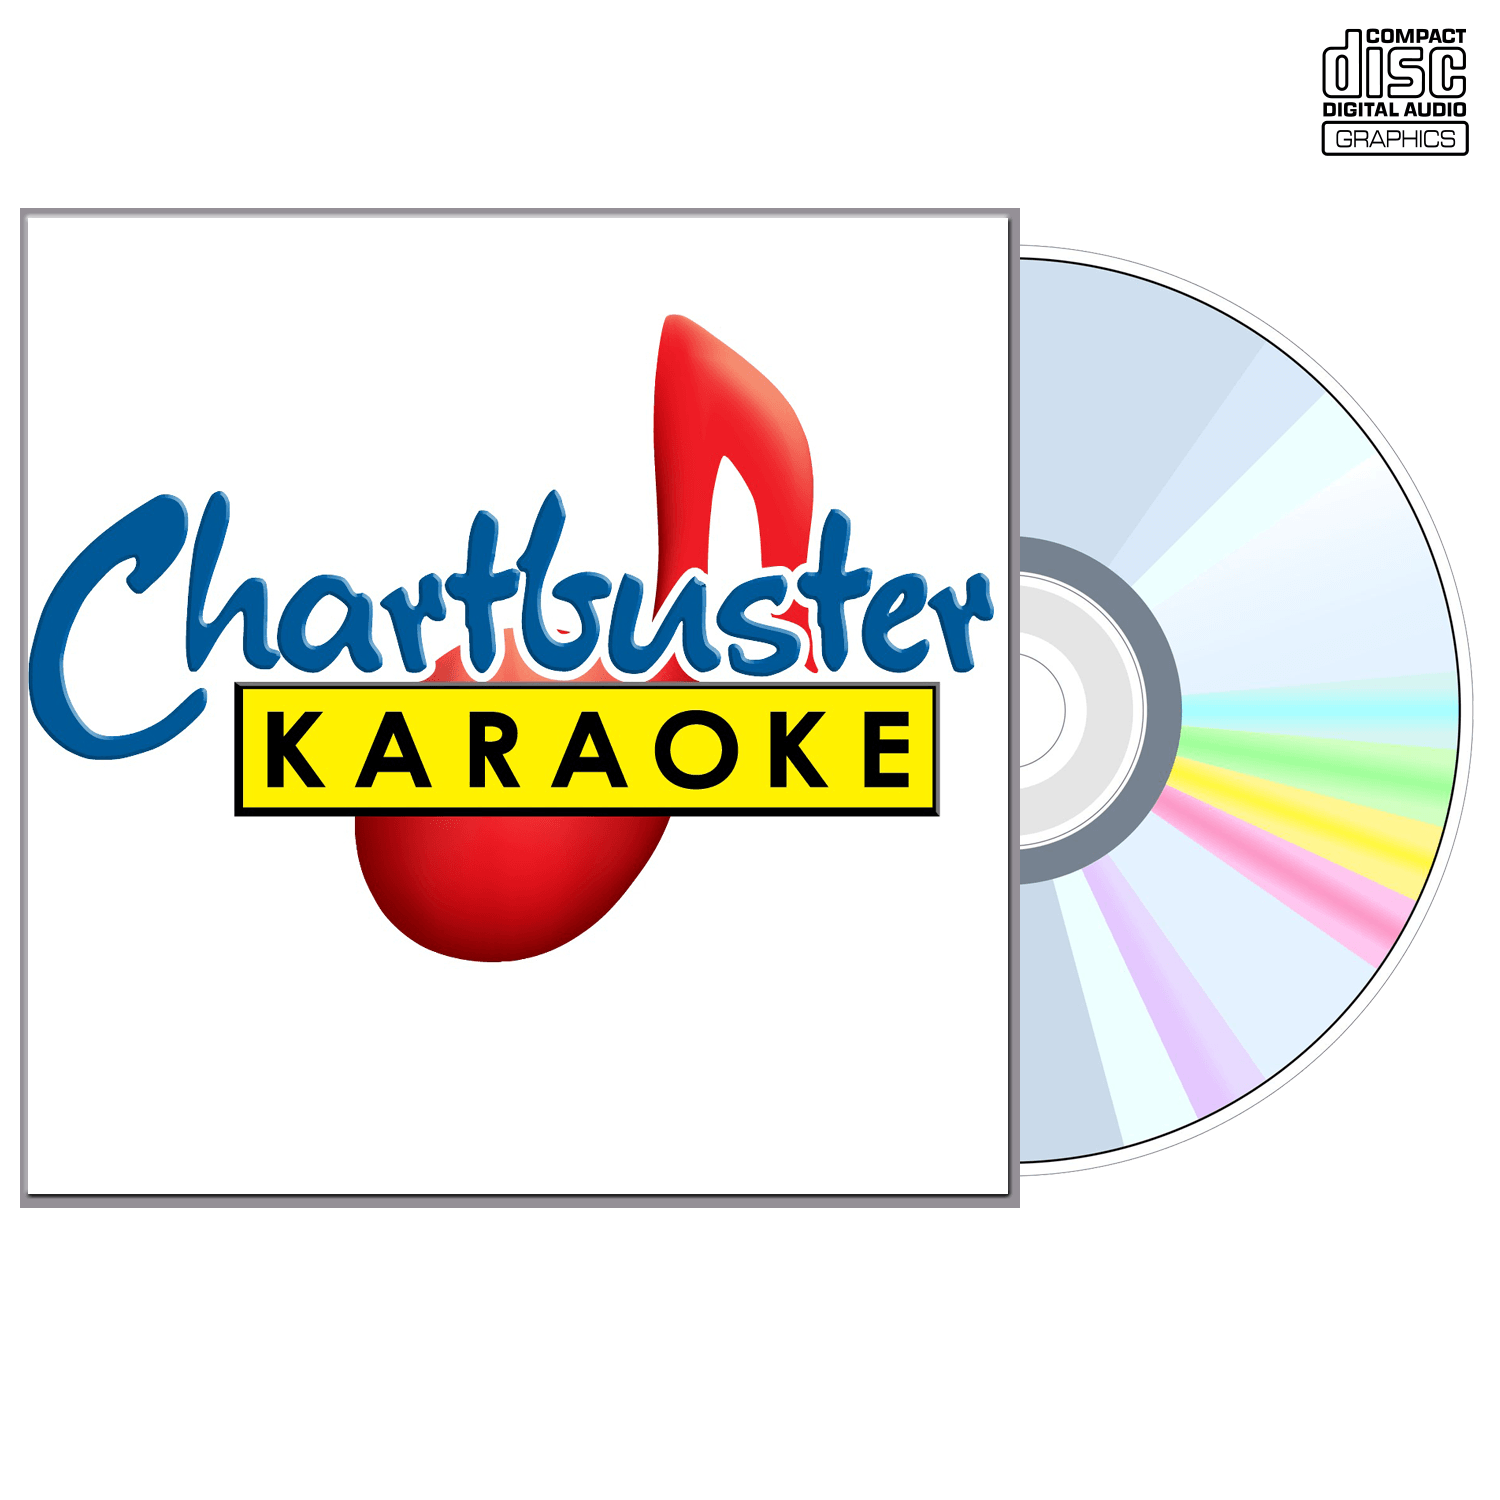 Steve Miller Band - CD+G - Chartbuster Karaoke - Karaoke Home Entertainment